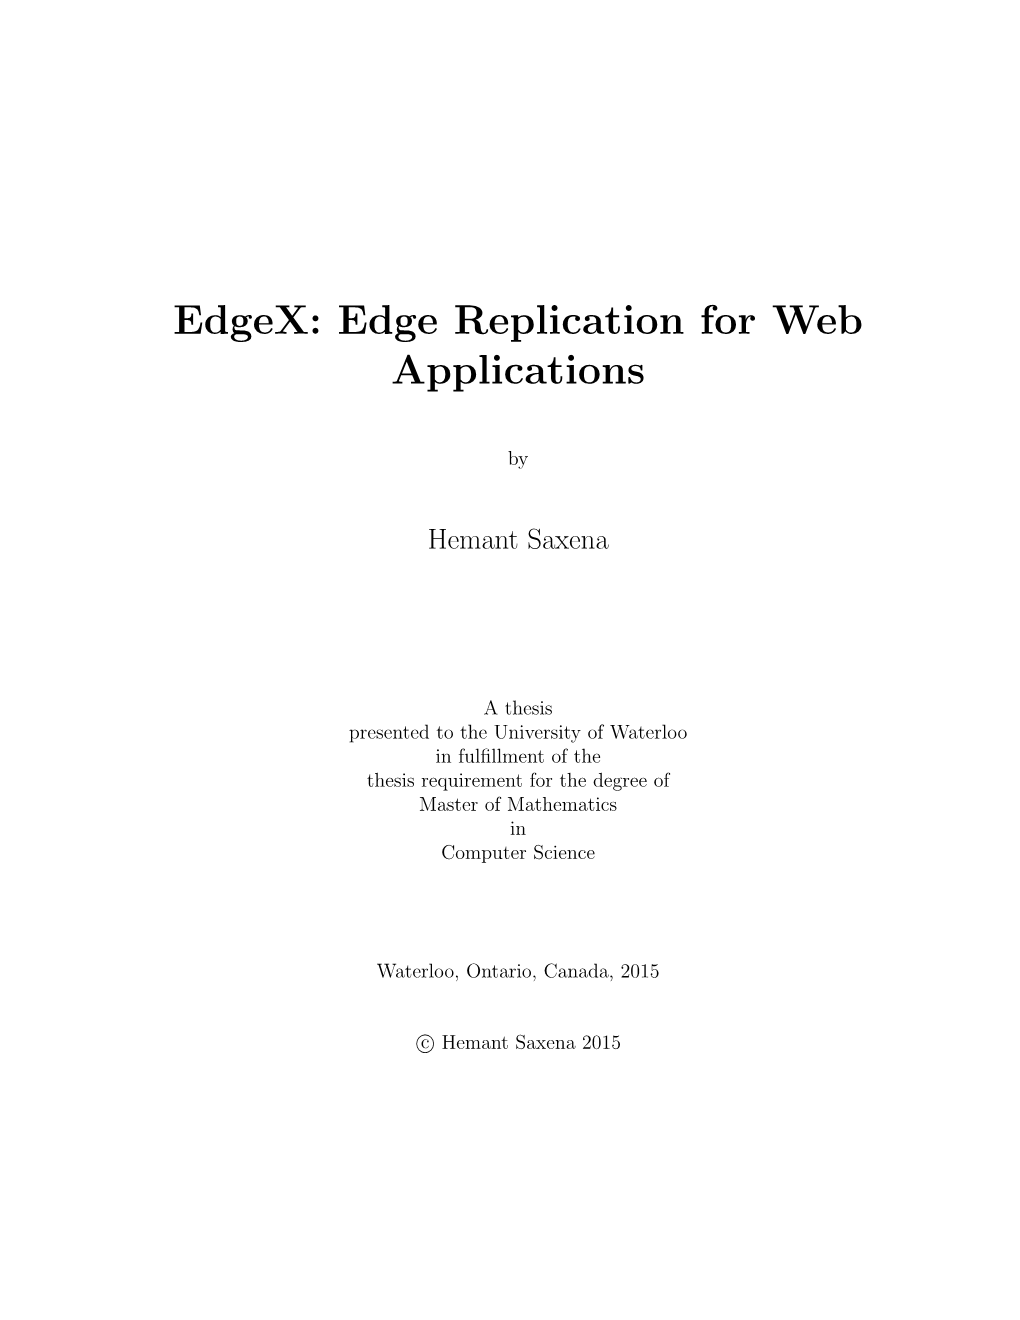 Edgex: Edge Replication for Web Applications